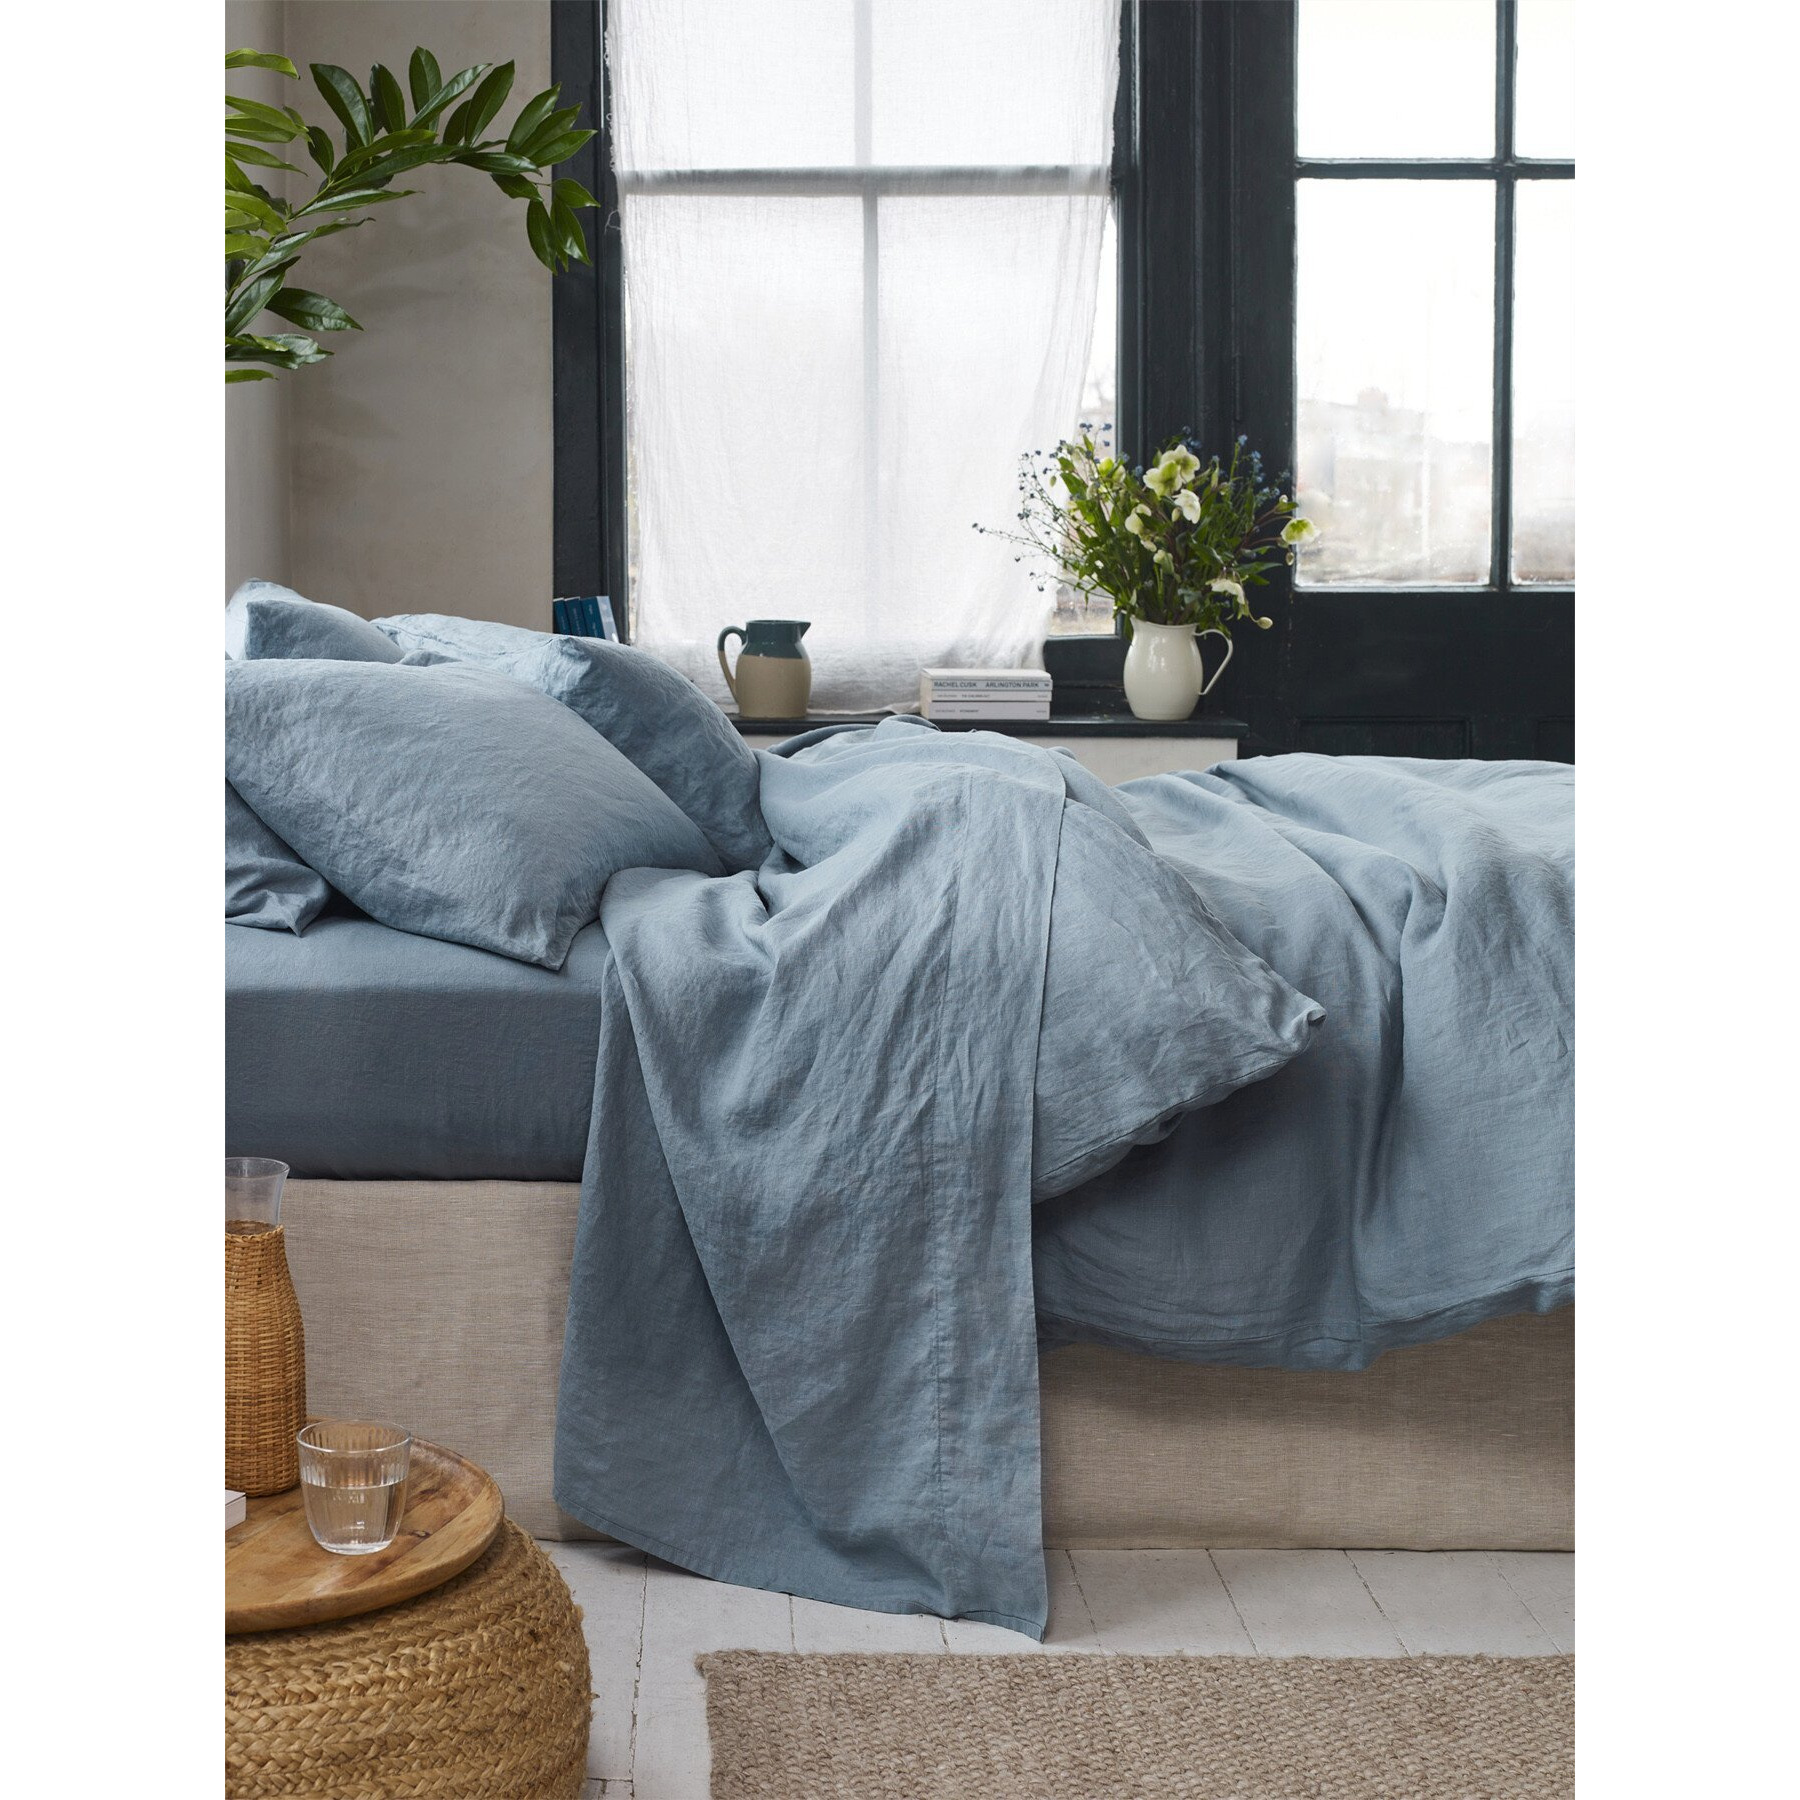 Piglet in Bed Linen Flat Sheet - Size King Blue - image 1